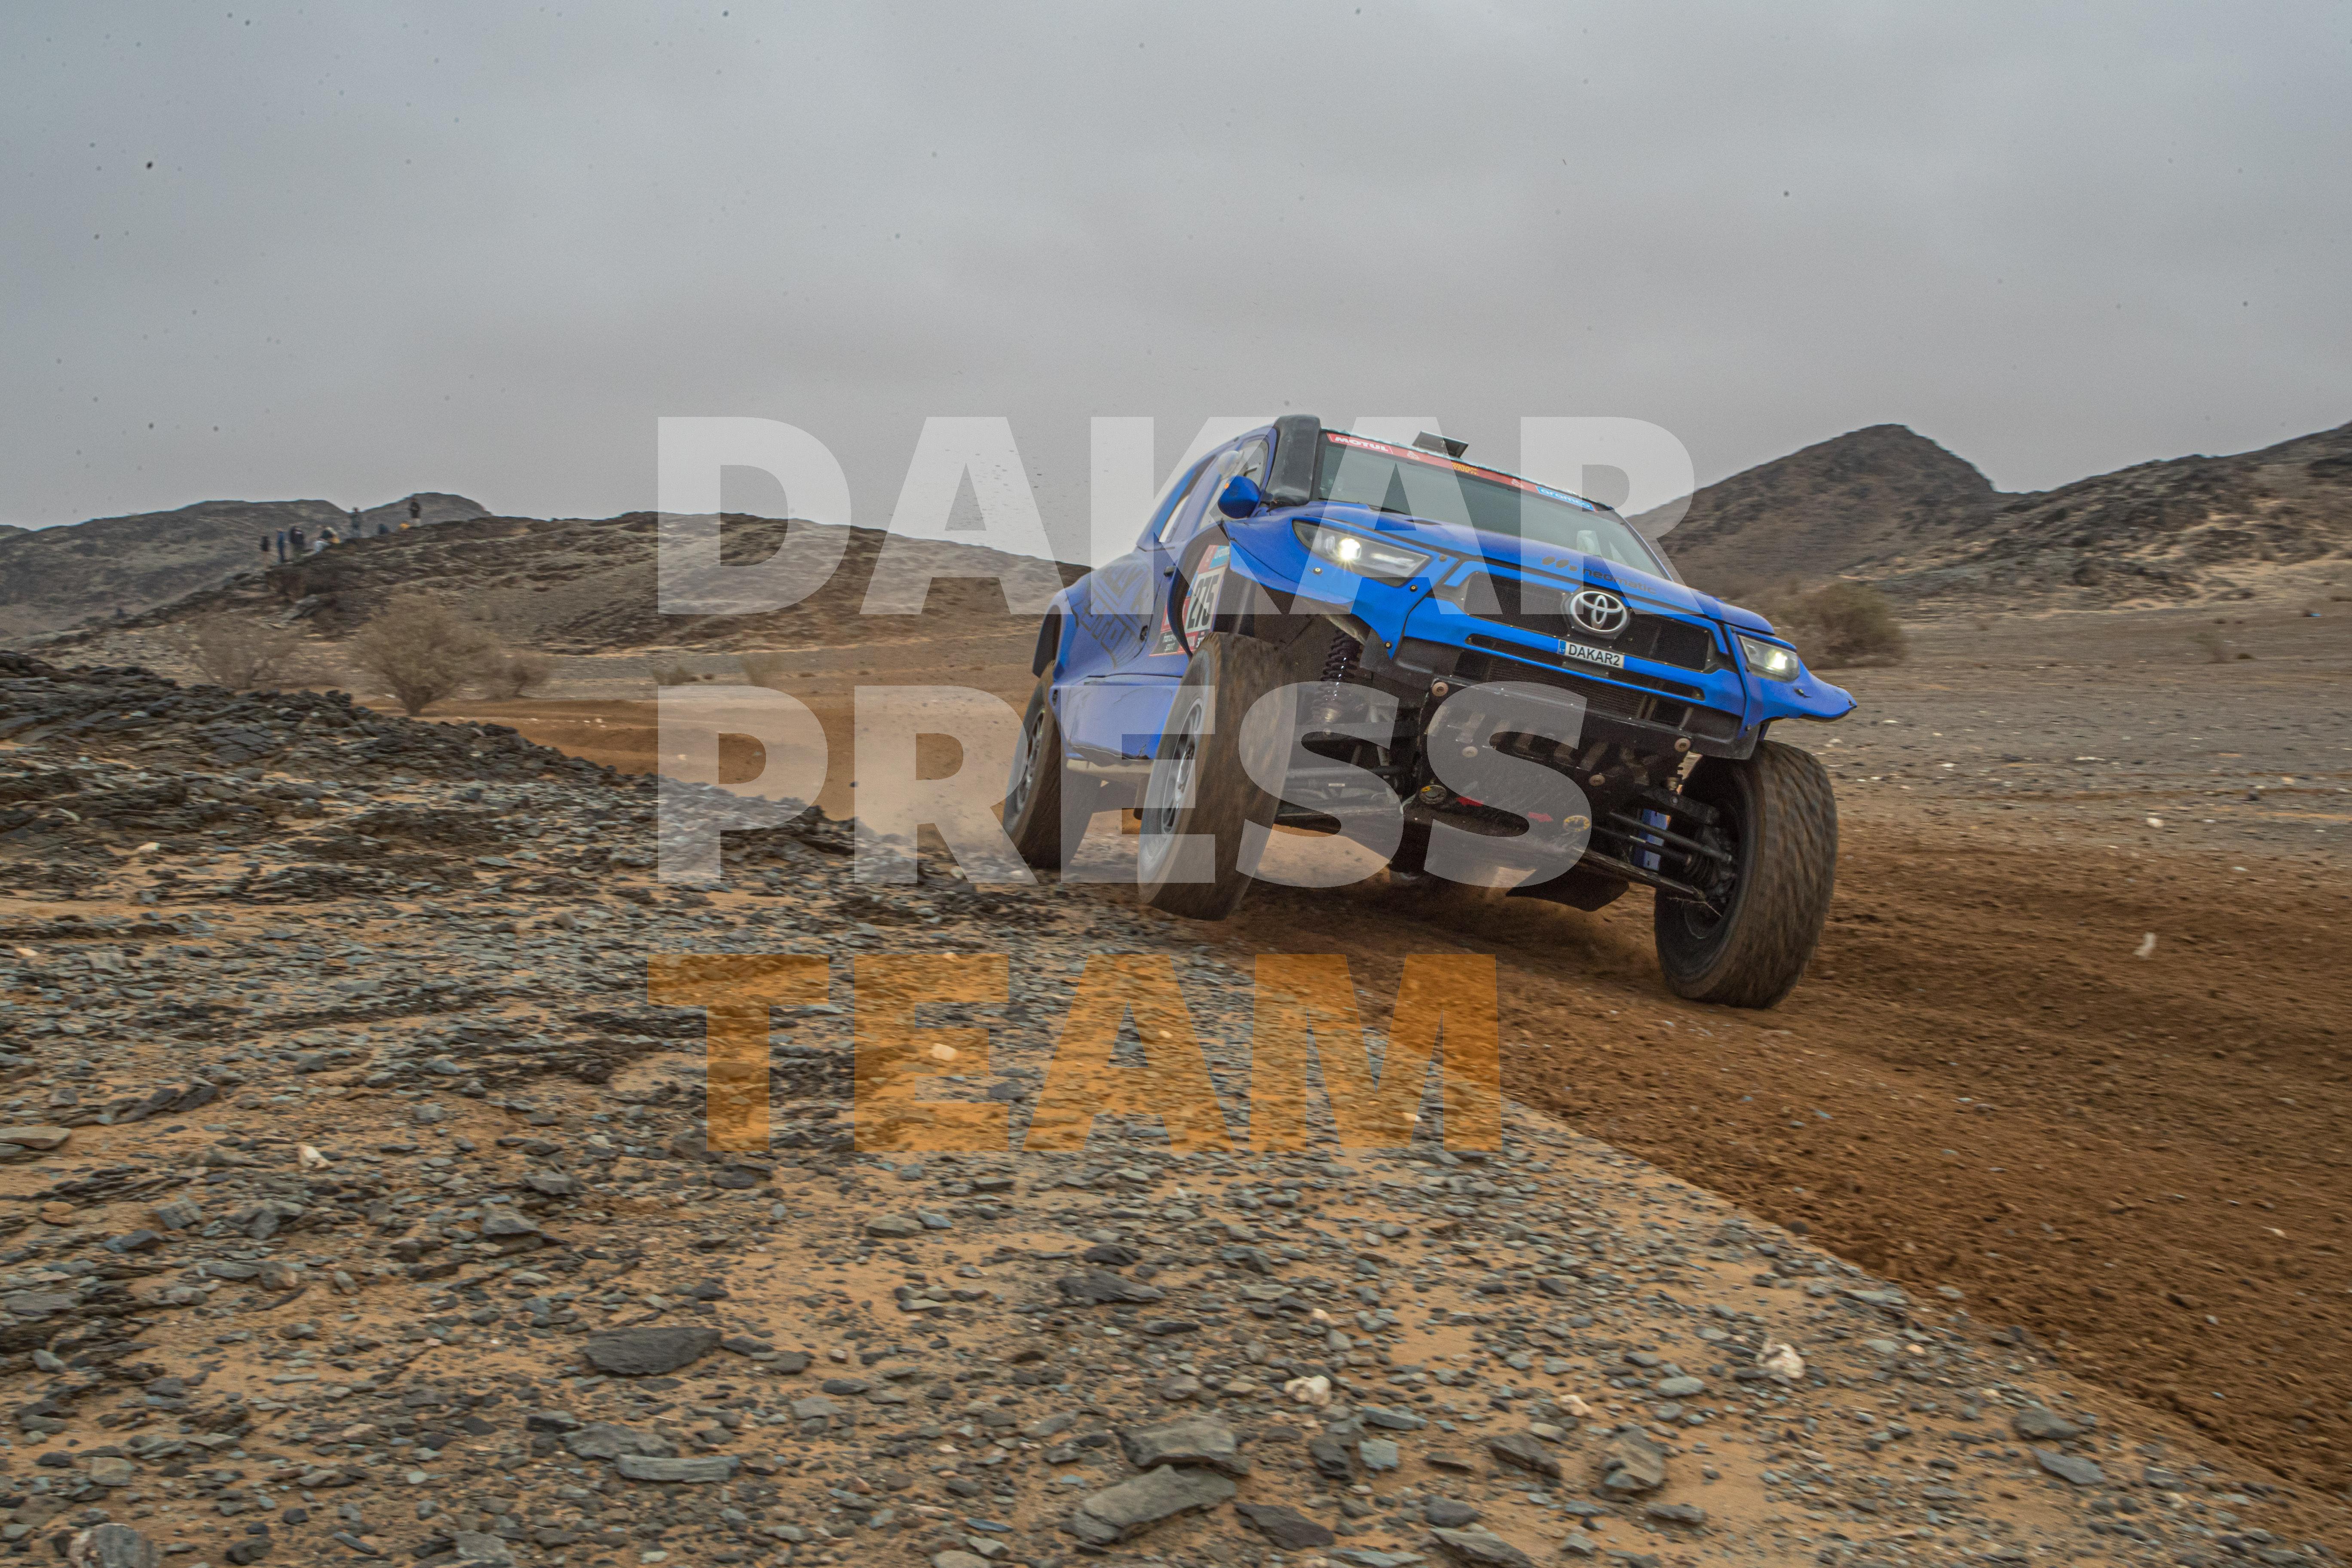 Dakar Press Team AUSTRALIA - Owner Dakar Press Team AUSTRALIA - Own